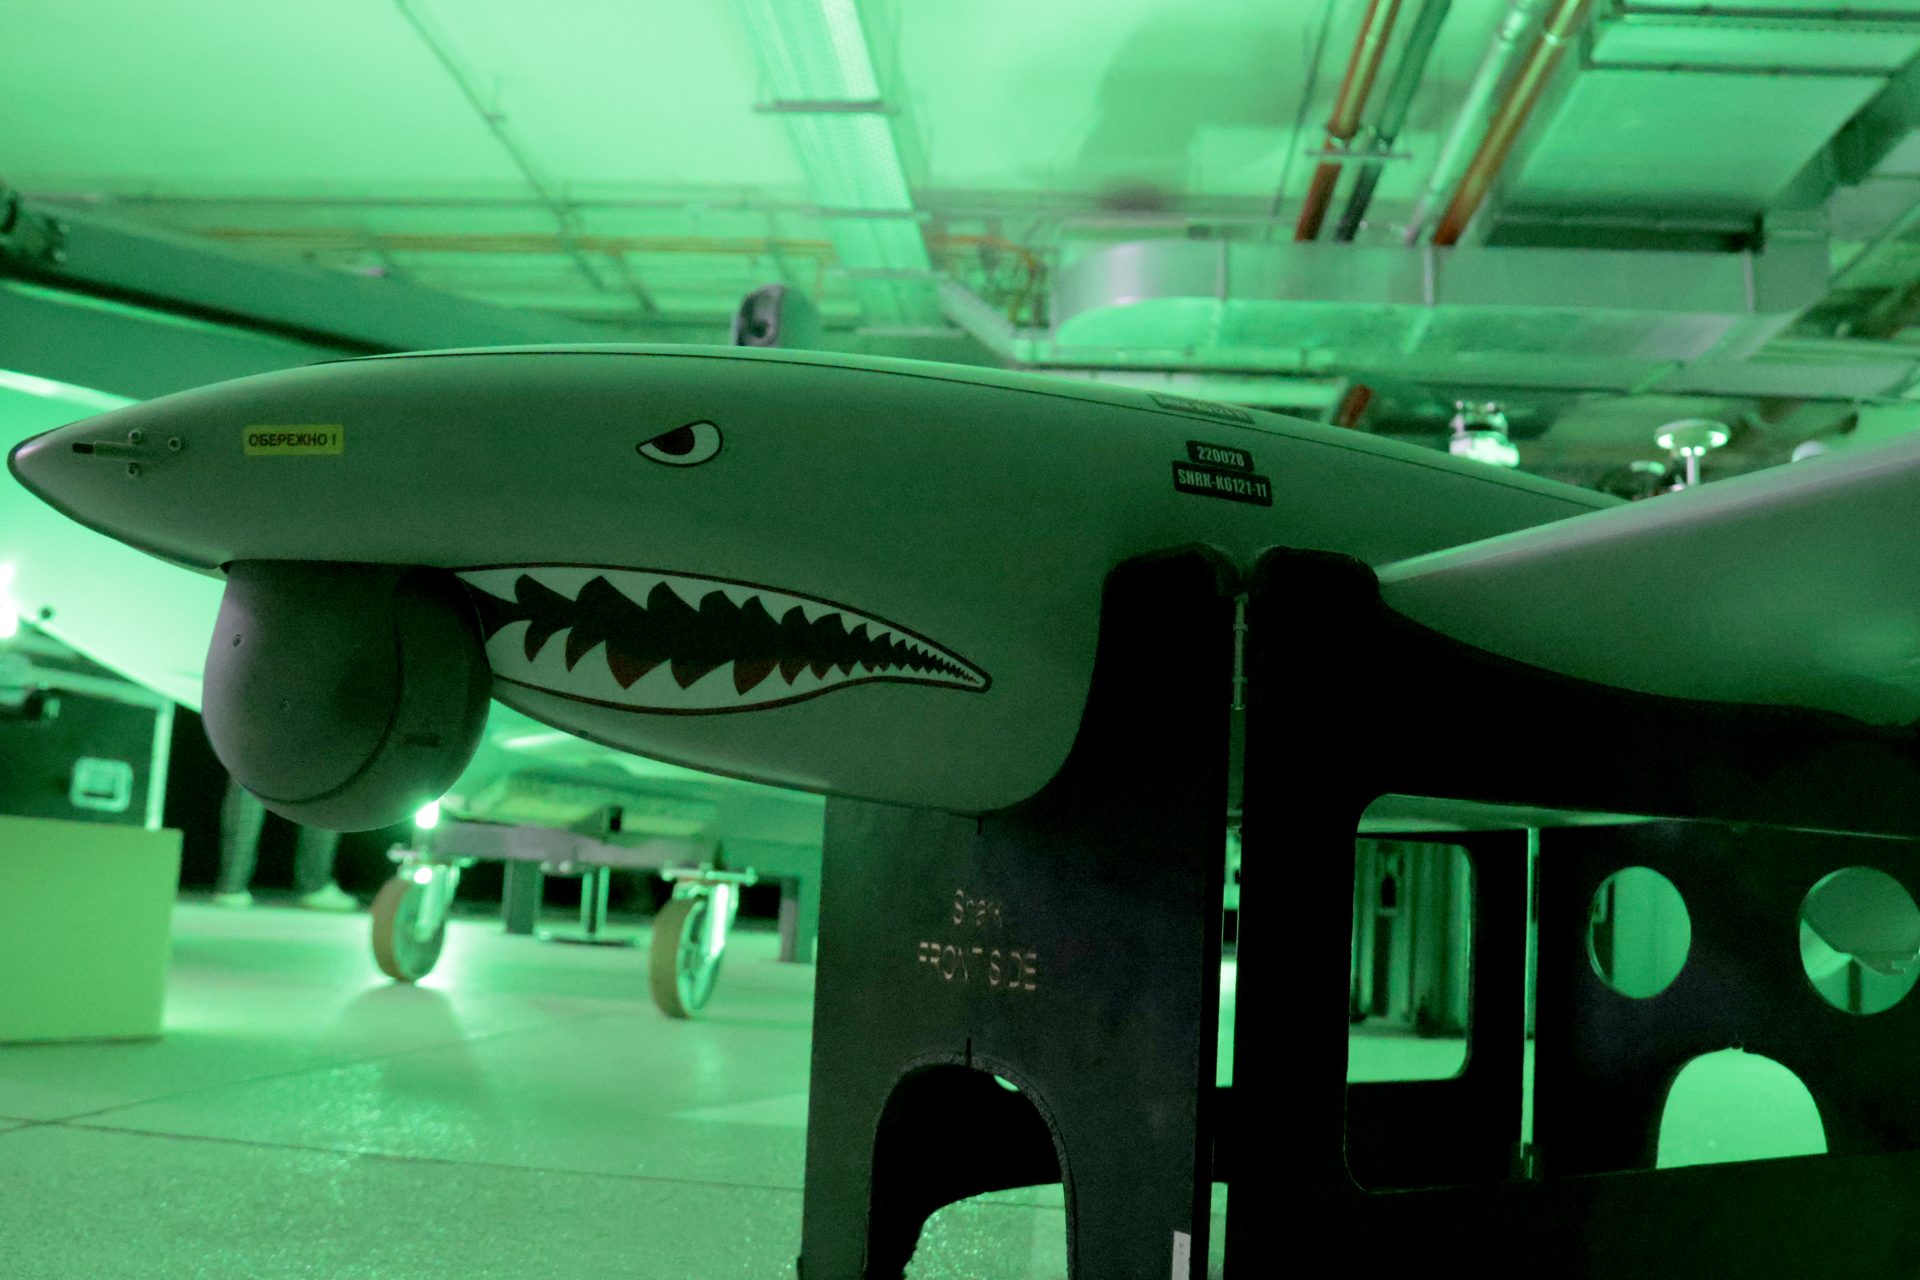 The Shark reconnaissance drone 